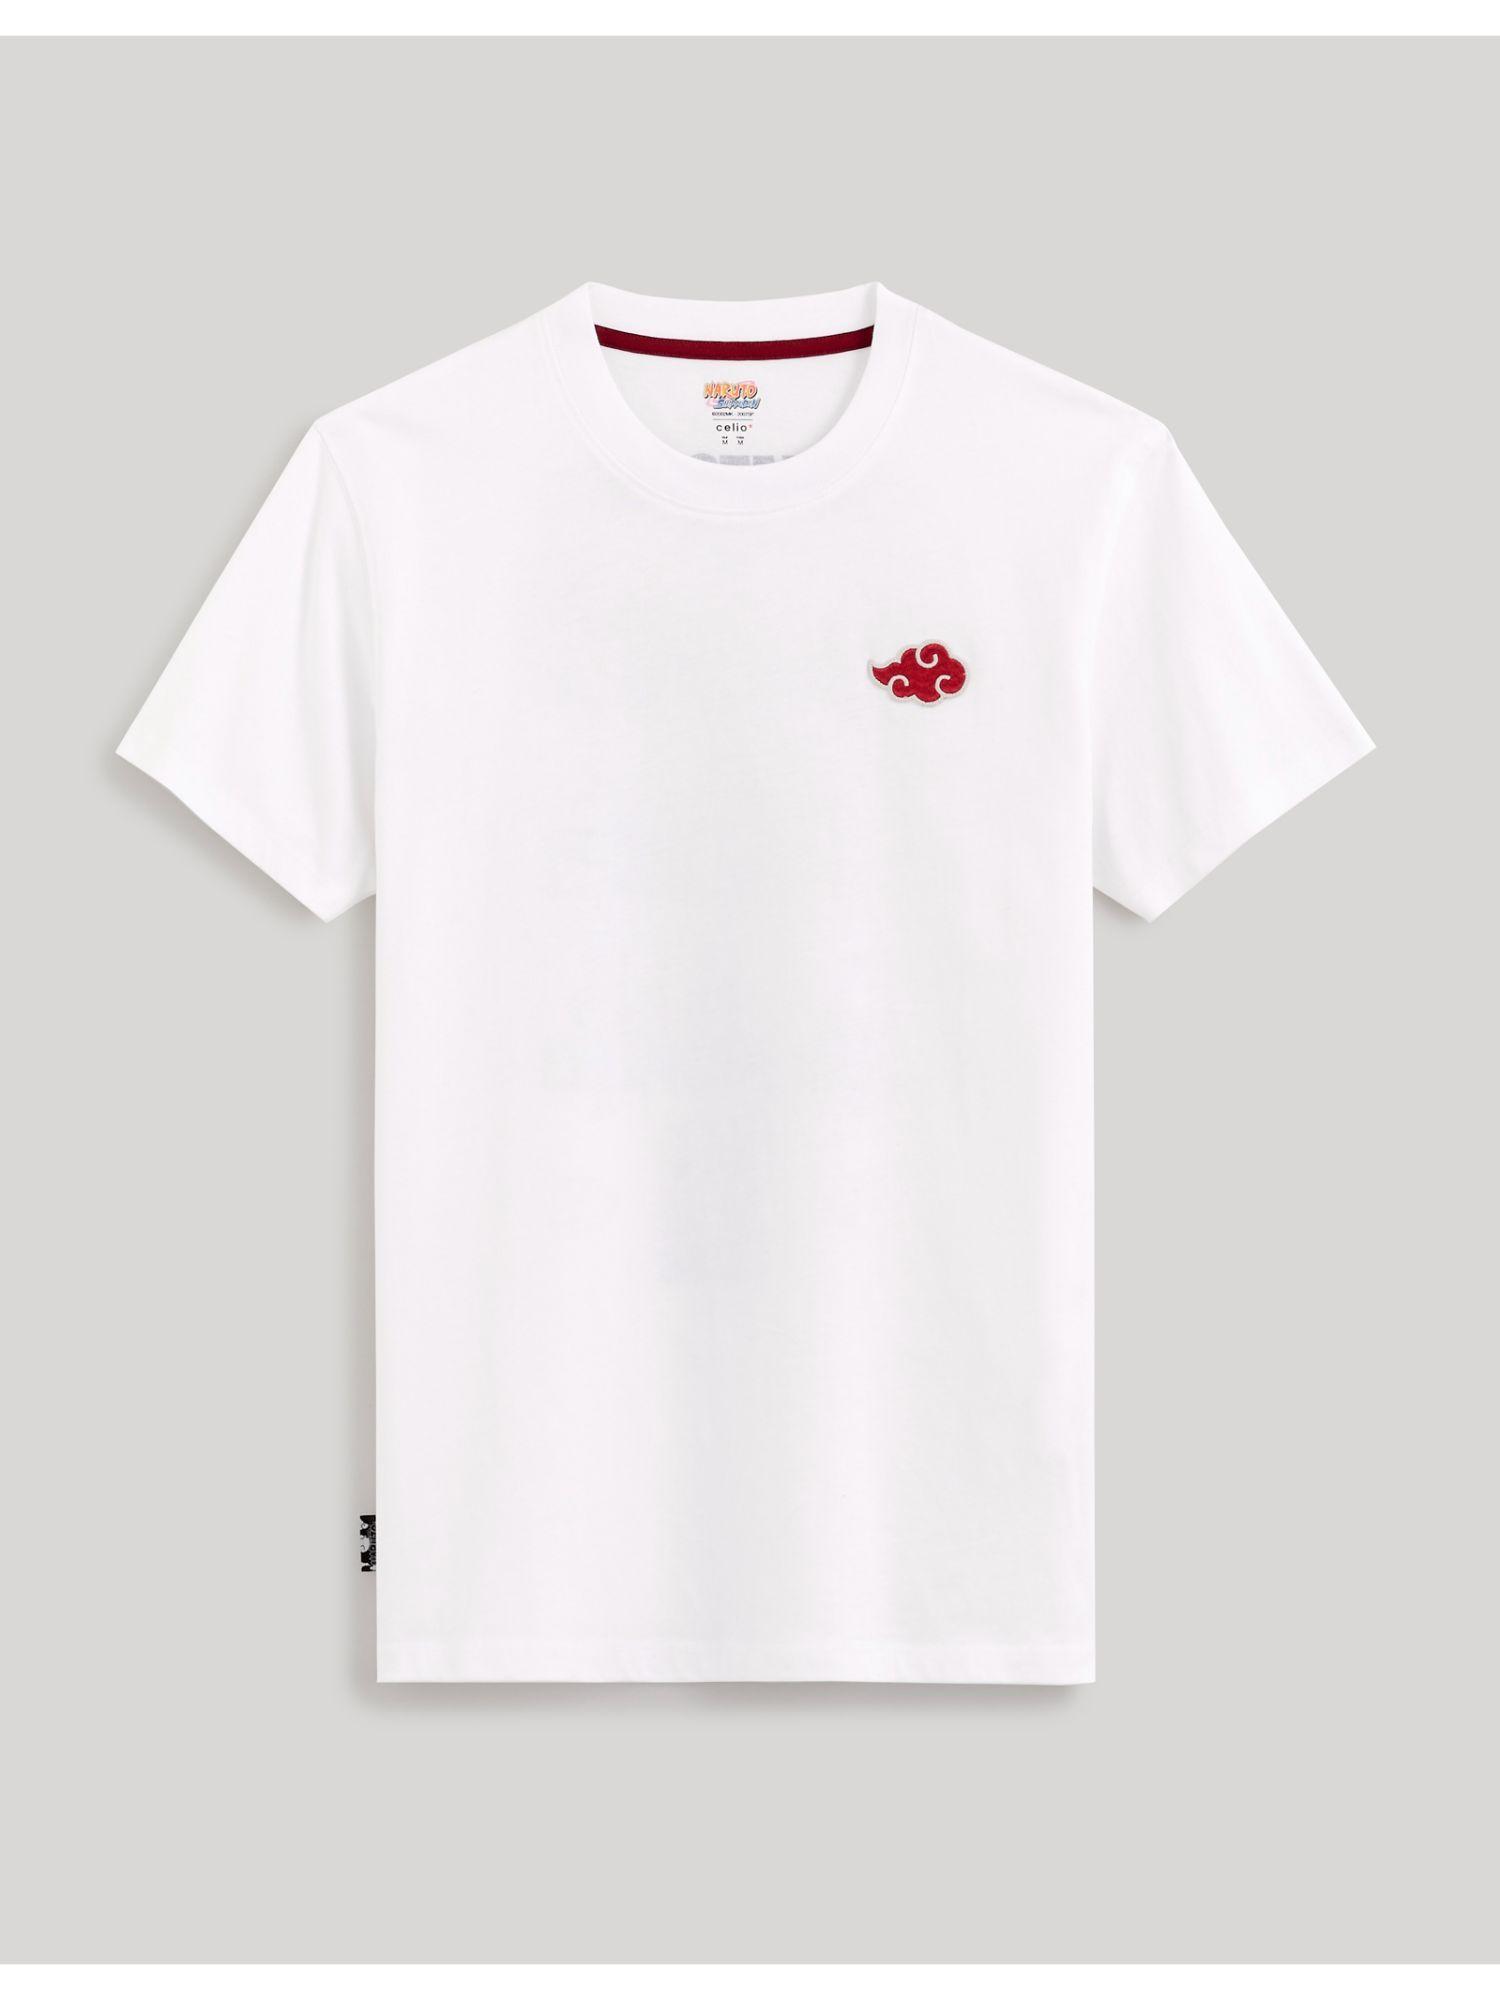 naruto shippuden printed blanc t-shirt